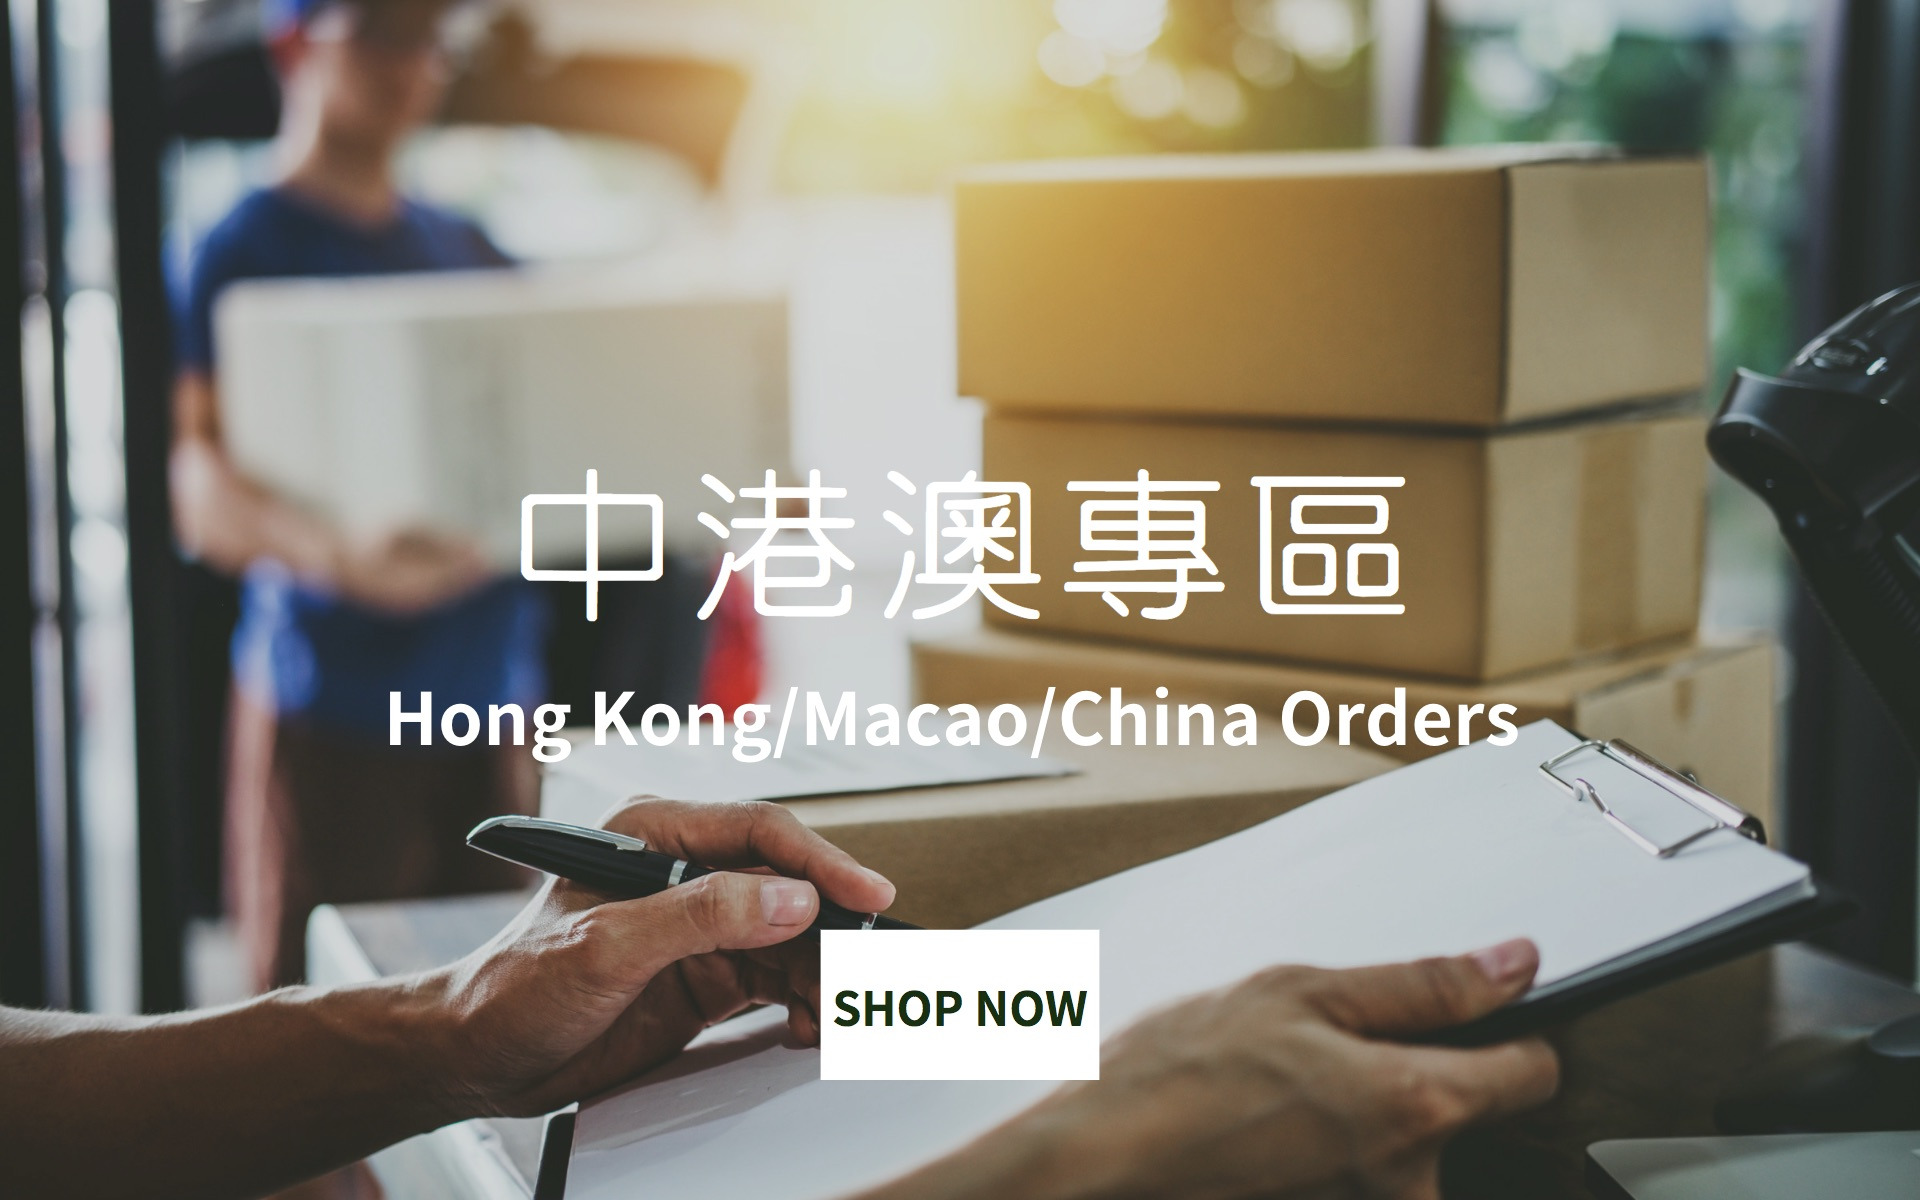 HK/China/Macao Orders